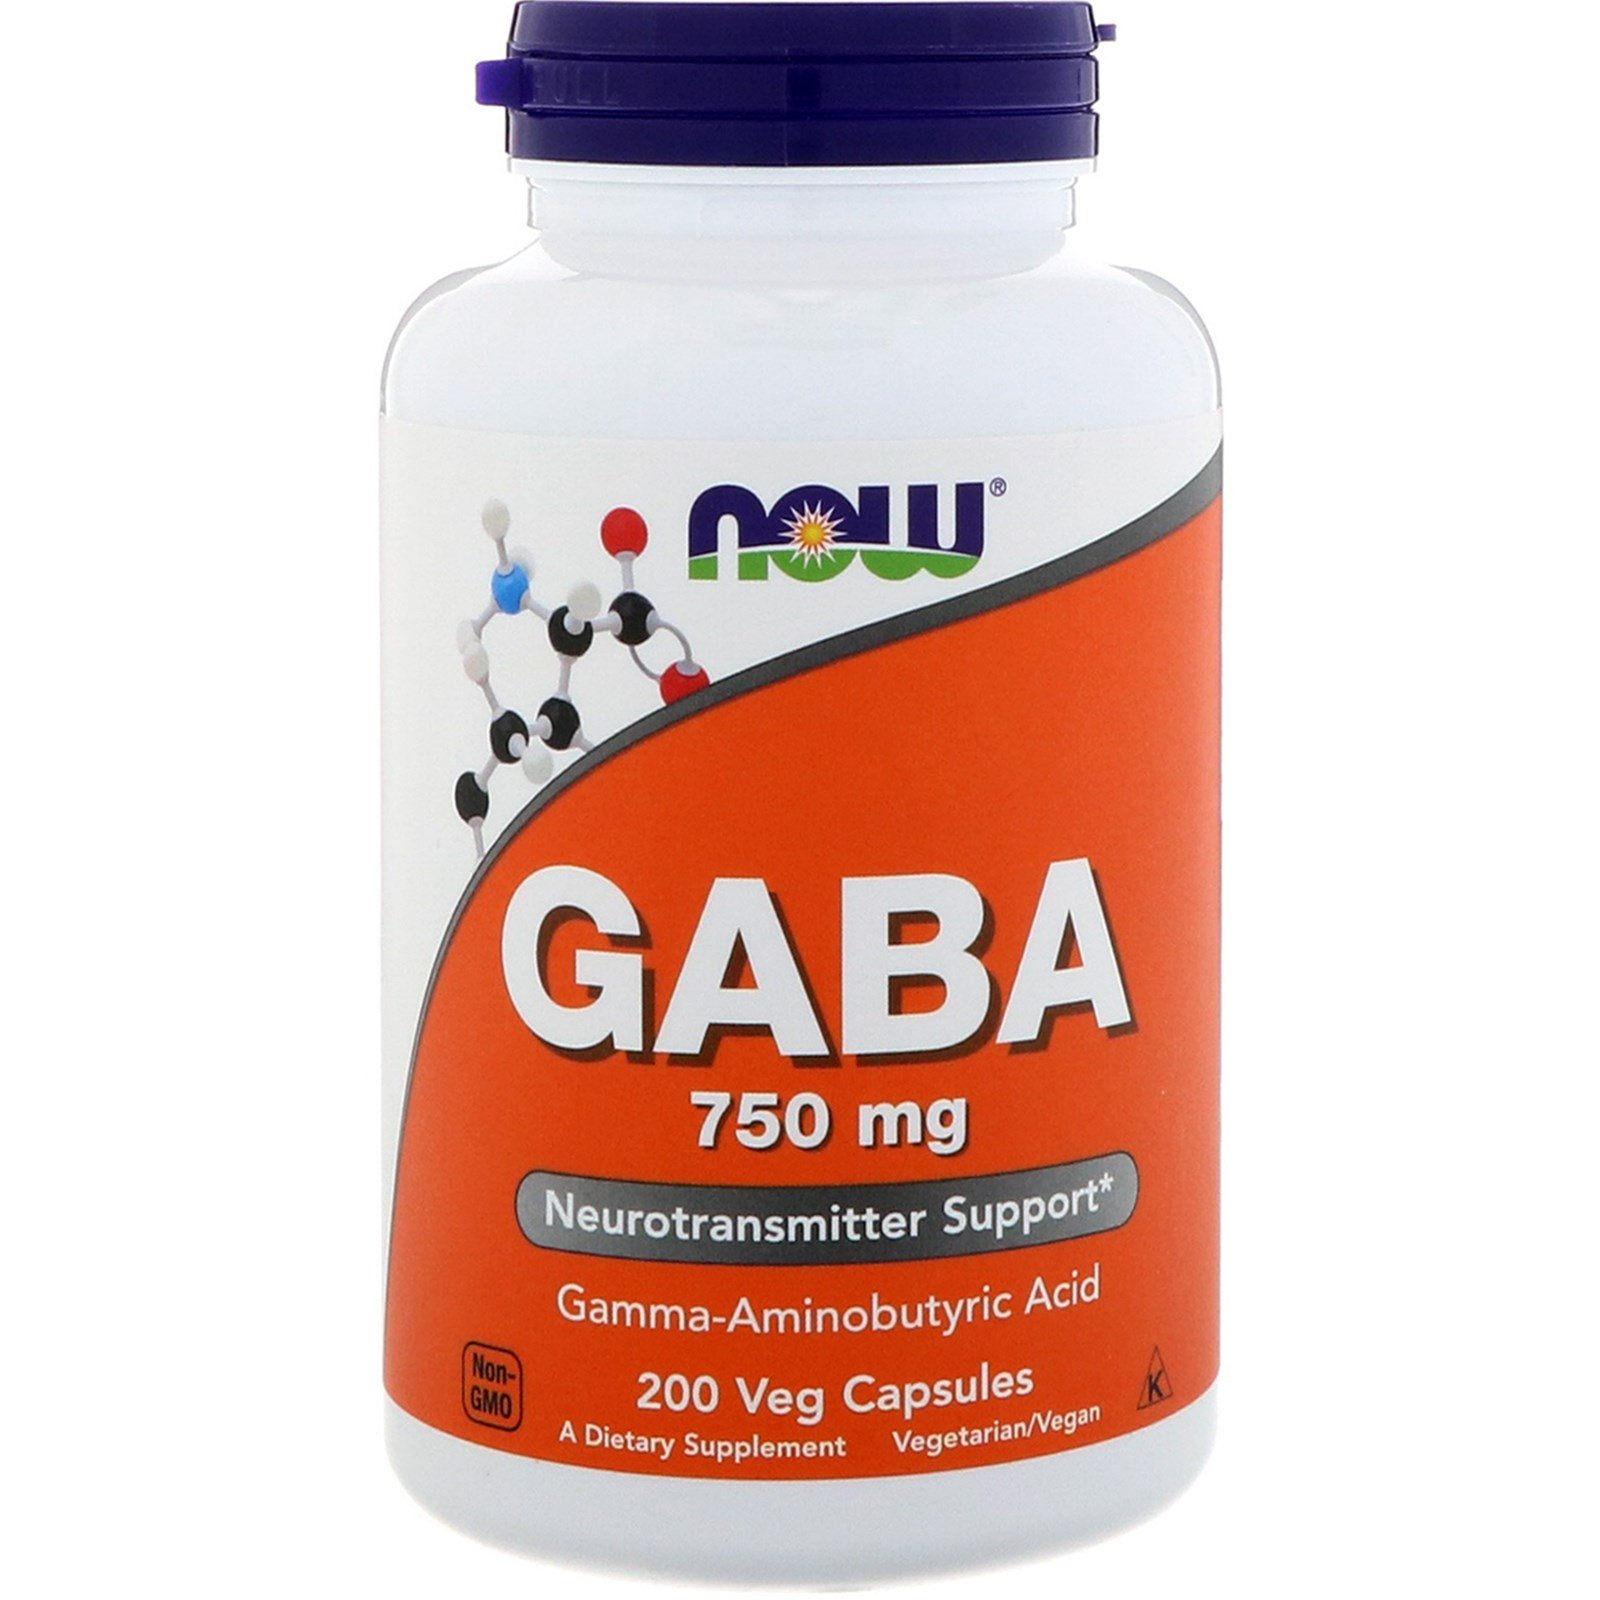 GABA, ГАБА Гамма-Аминомасляная Кислота (ГАМК) 750 мг - 200 капсул